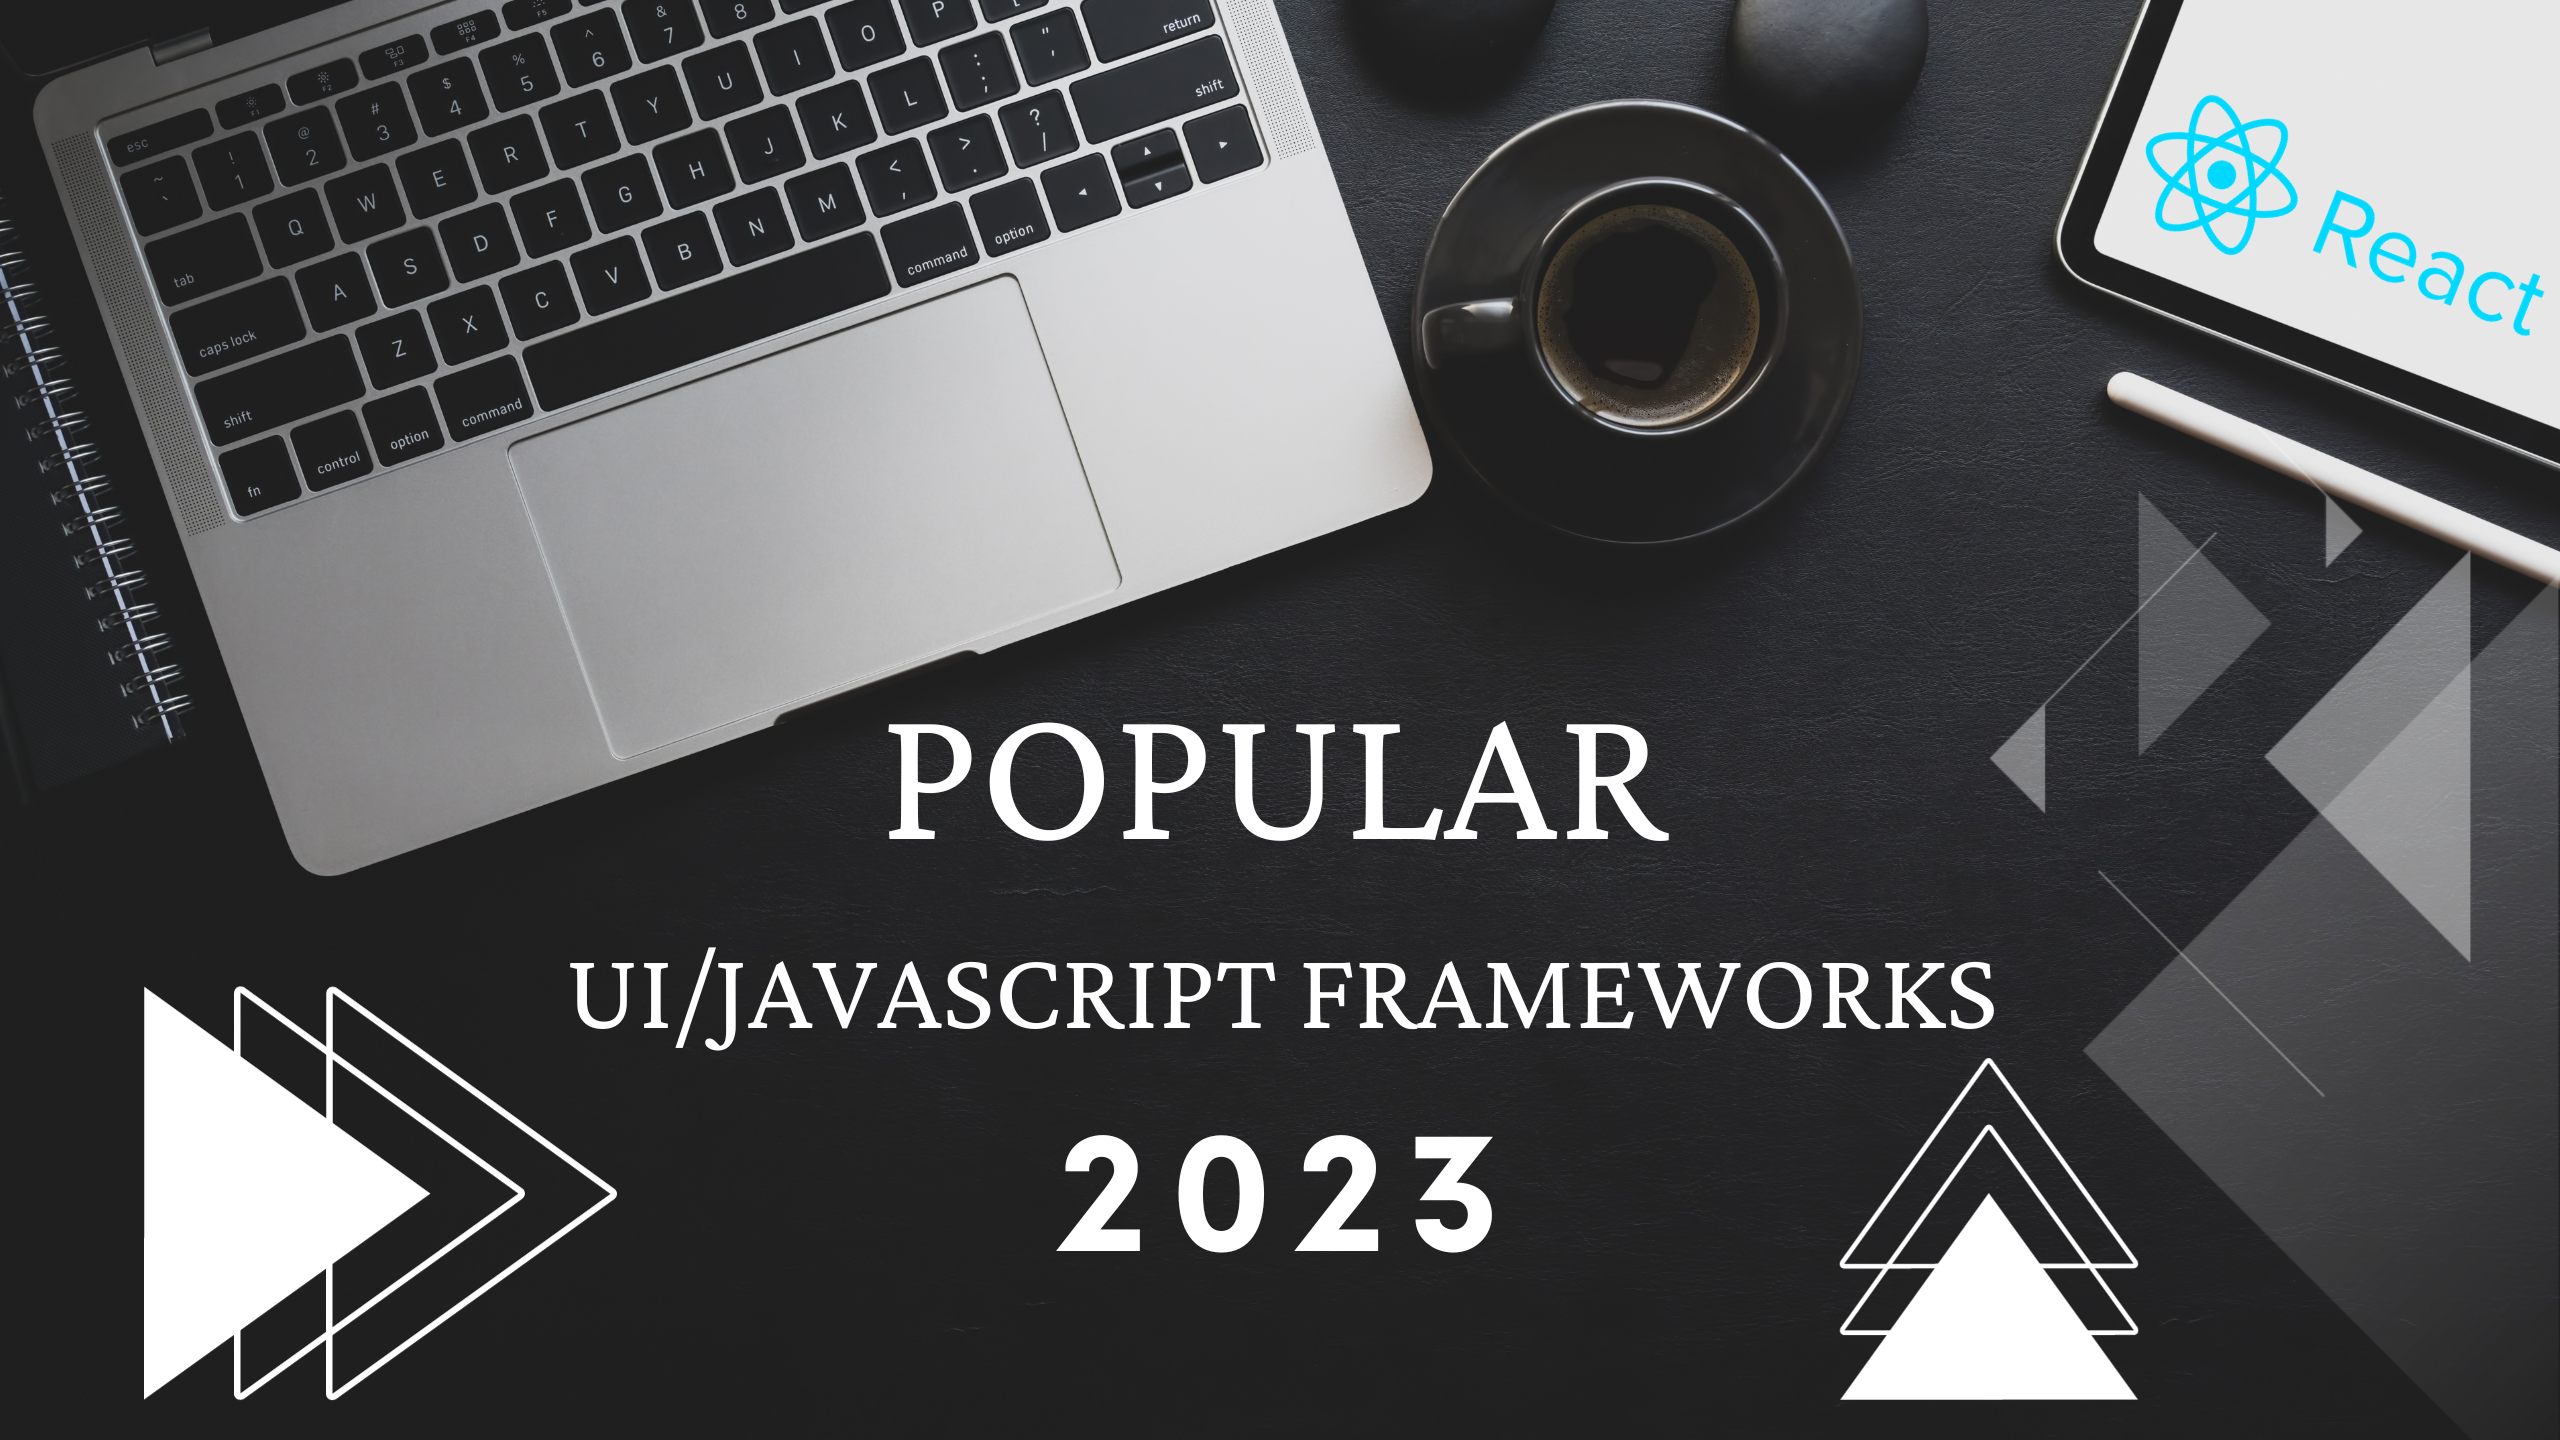 Ranking The Most Popular UI/JavaScript Frameworks in 2023